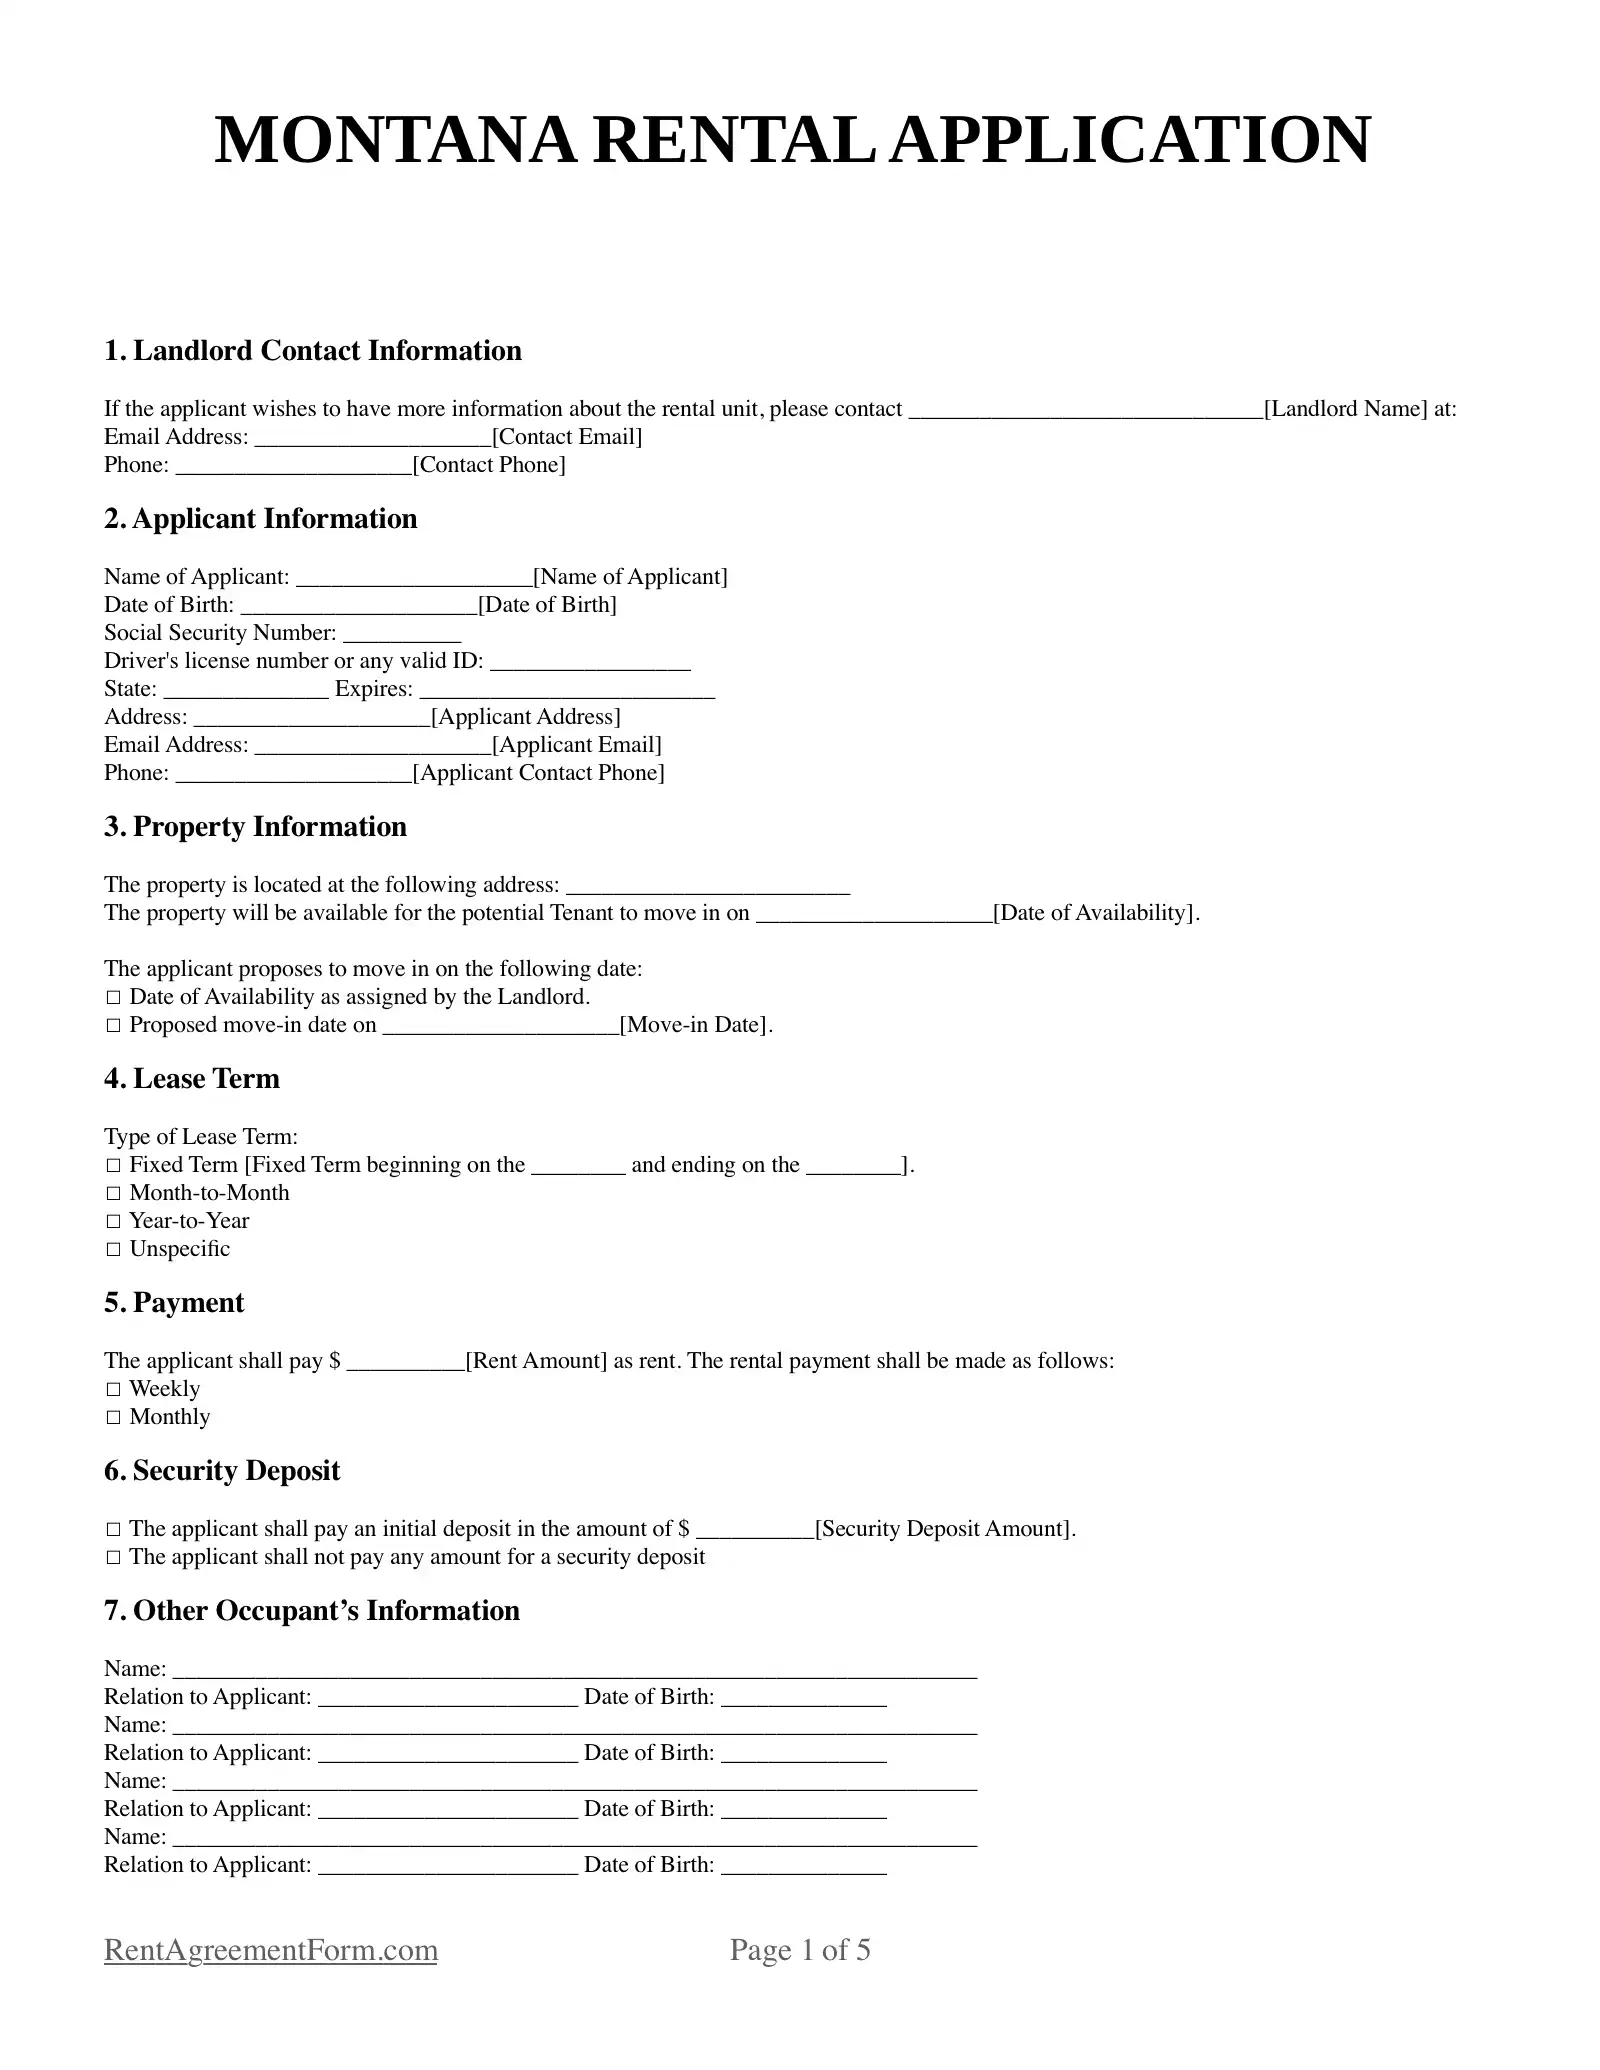 Montana Rental Application Sample